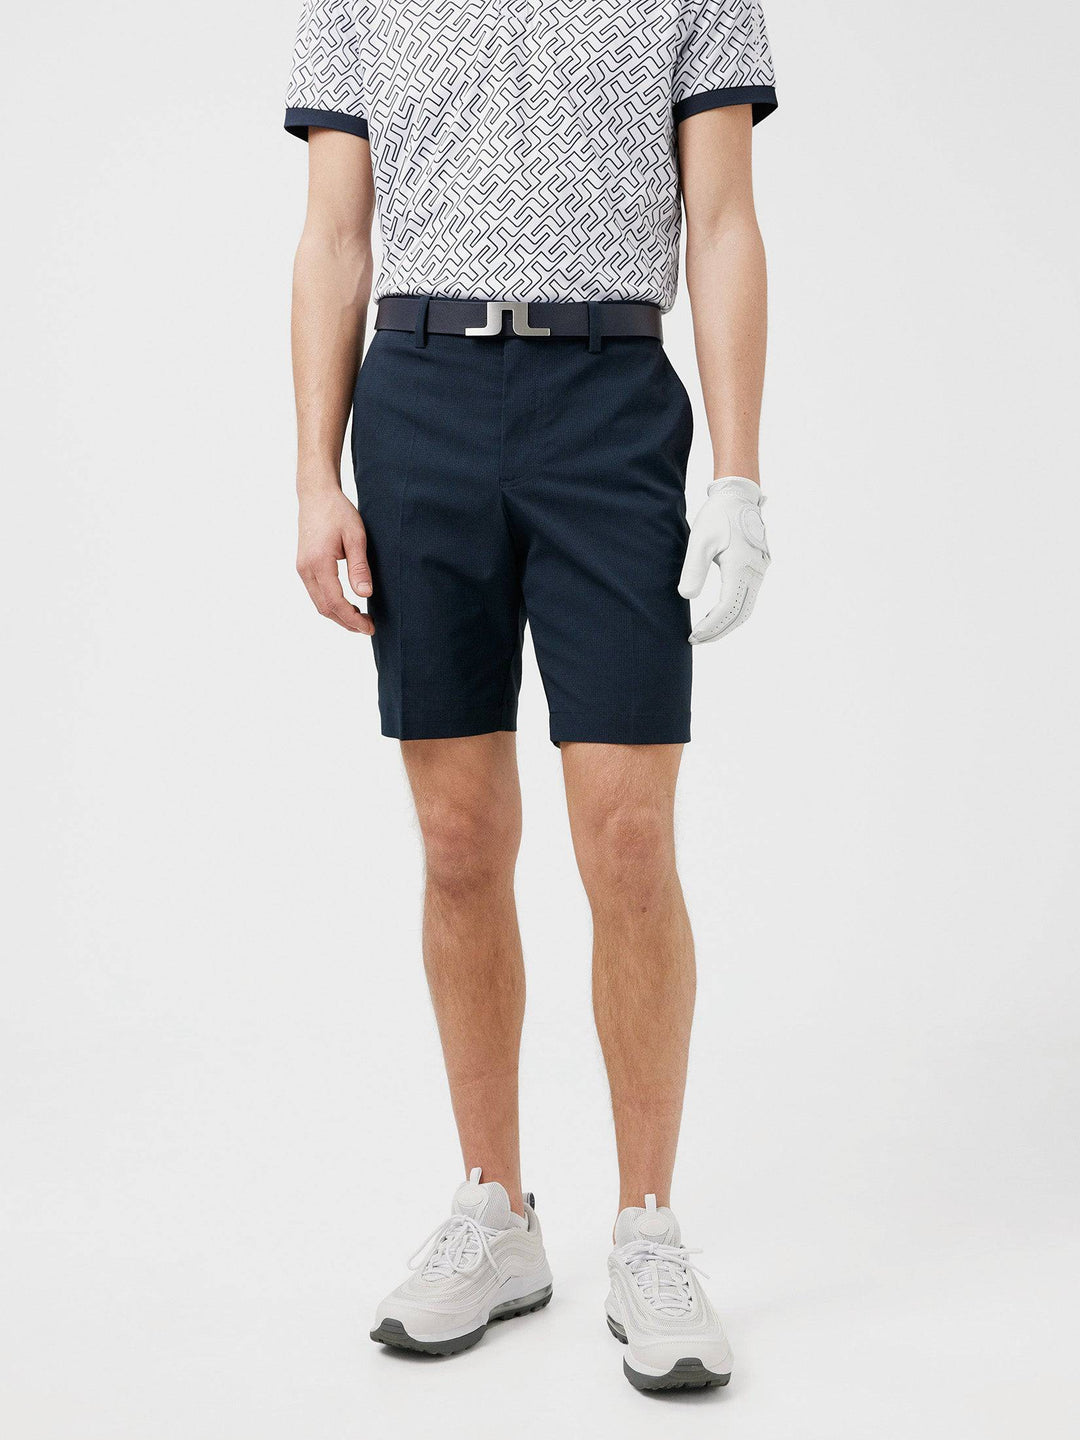 J.Lindeberg Mens Vent Tight Golf Shorts - JL NAVY